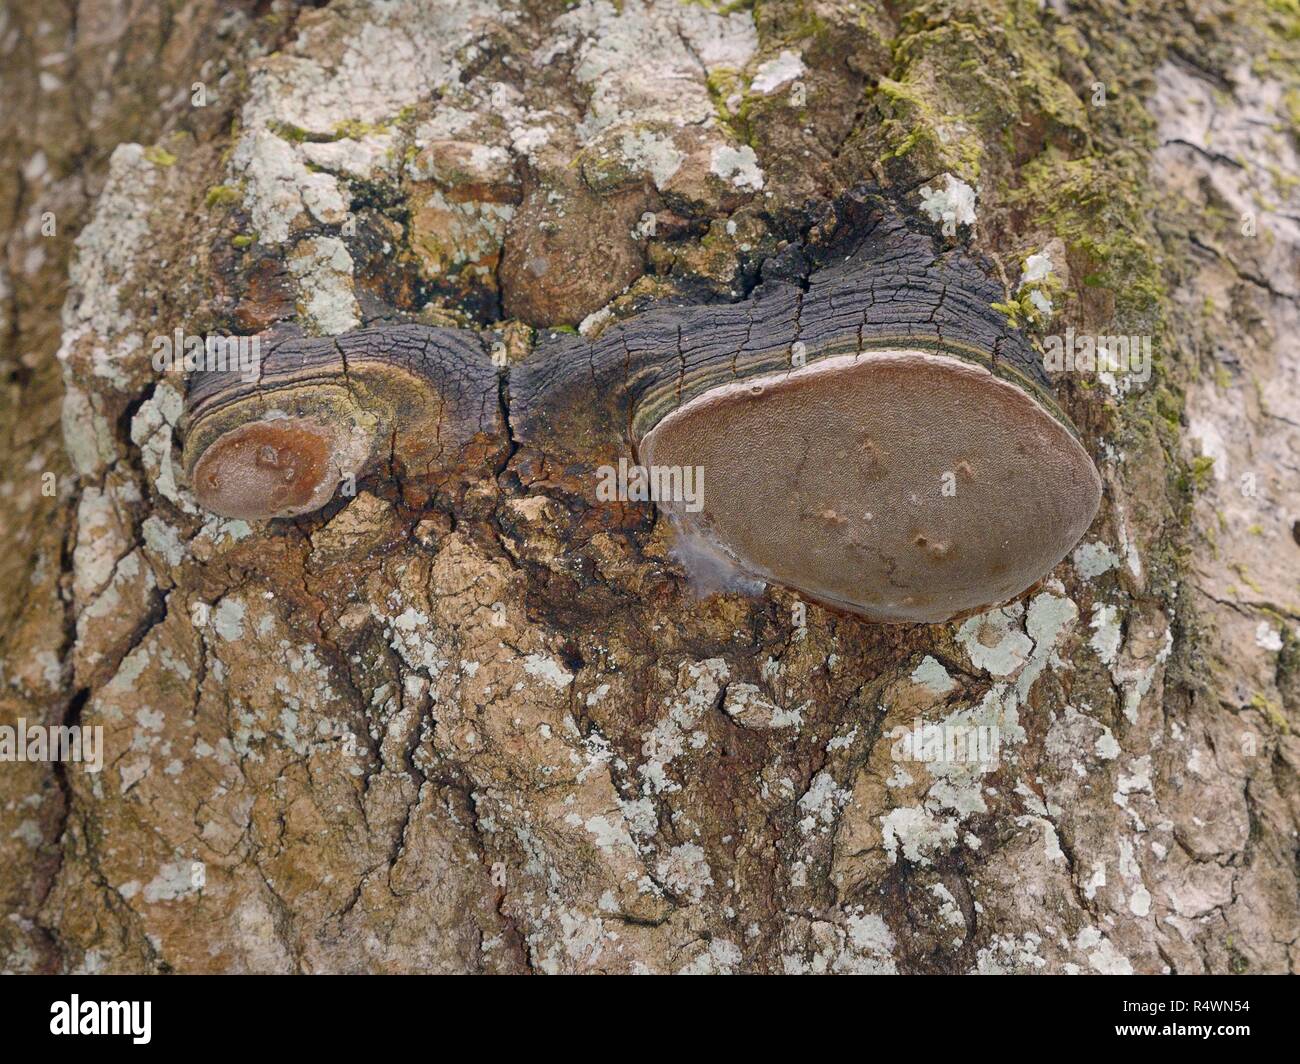 Aspen tronco rot / Falso yesca conk setas (Phellinus tremulae) órganos de fructificación del hongo visible en un viejo árbol de álamos (Populus tremula), tronco, Estonia Foto de stock